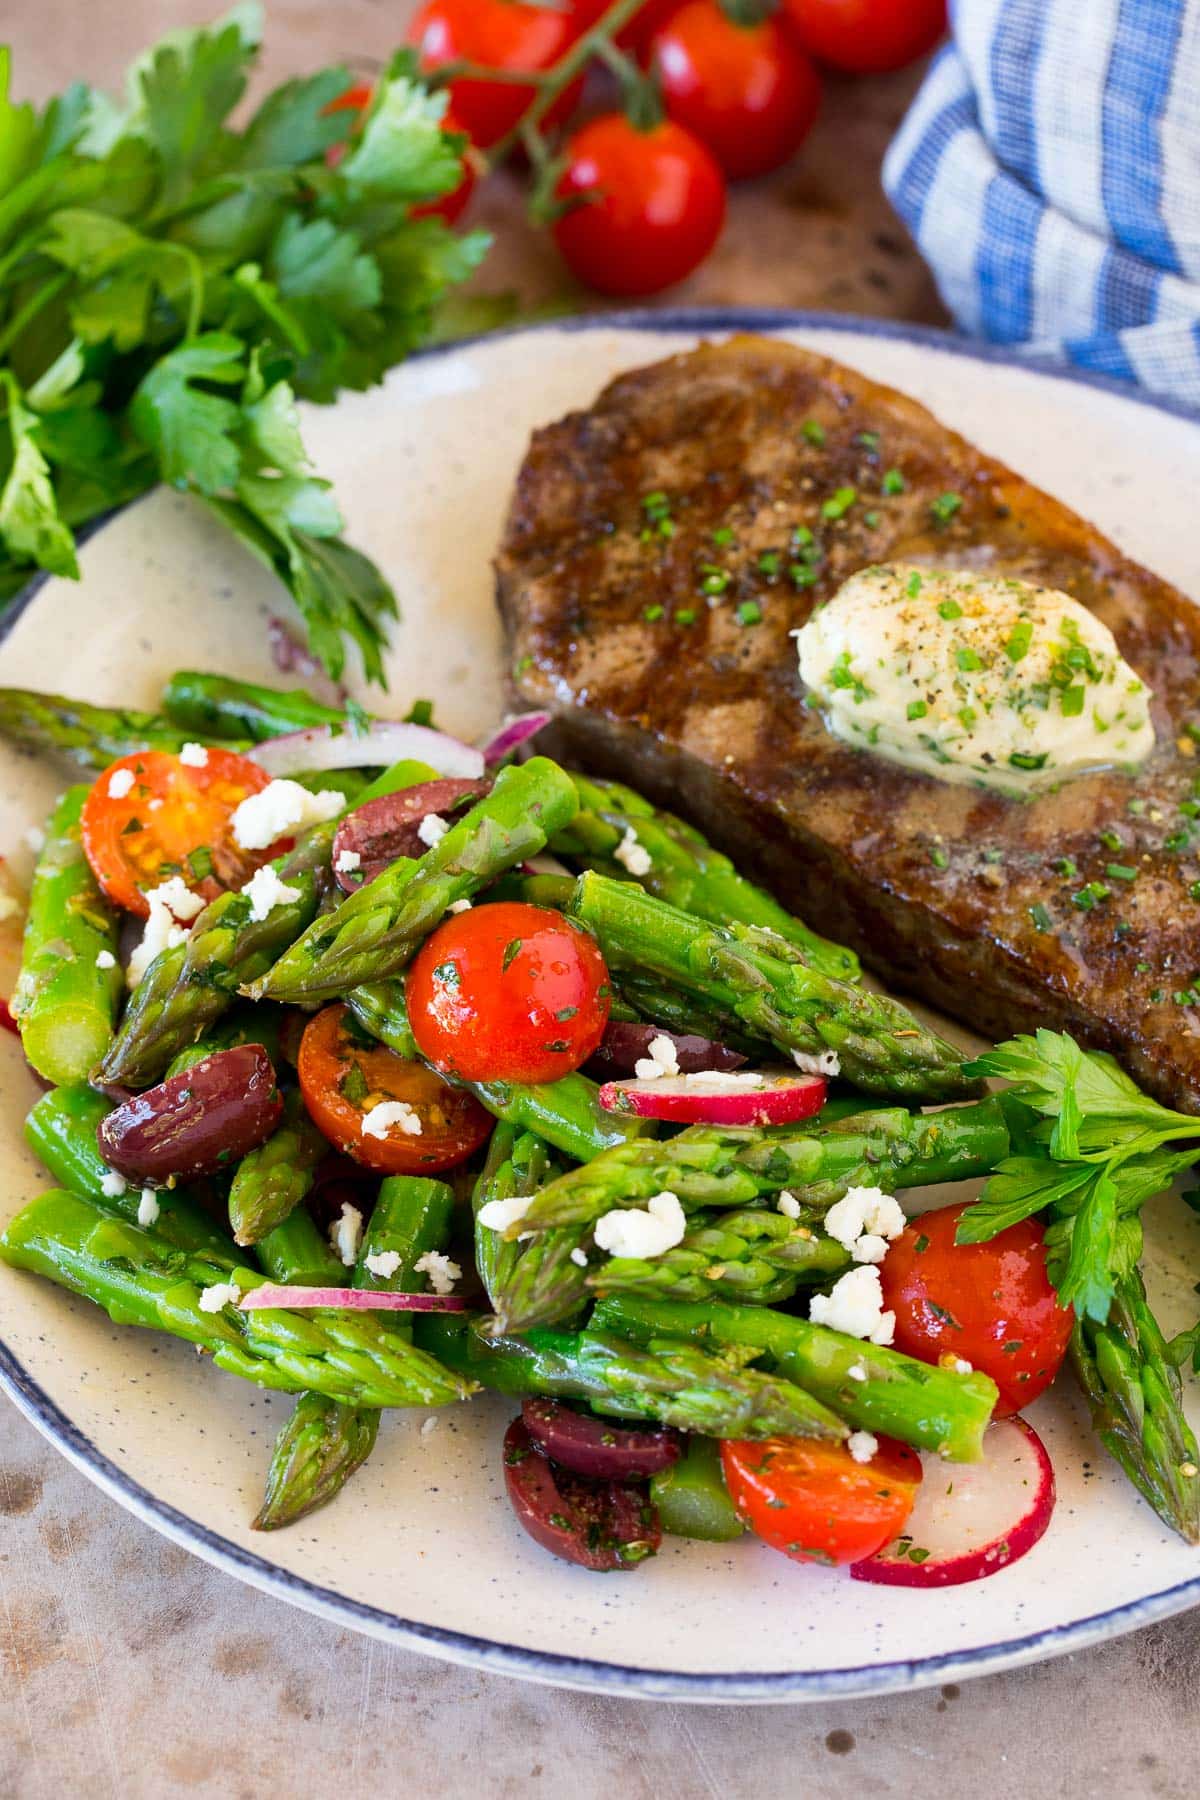 Asparagus salad served with grilled steak.